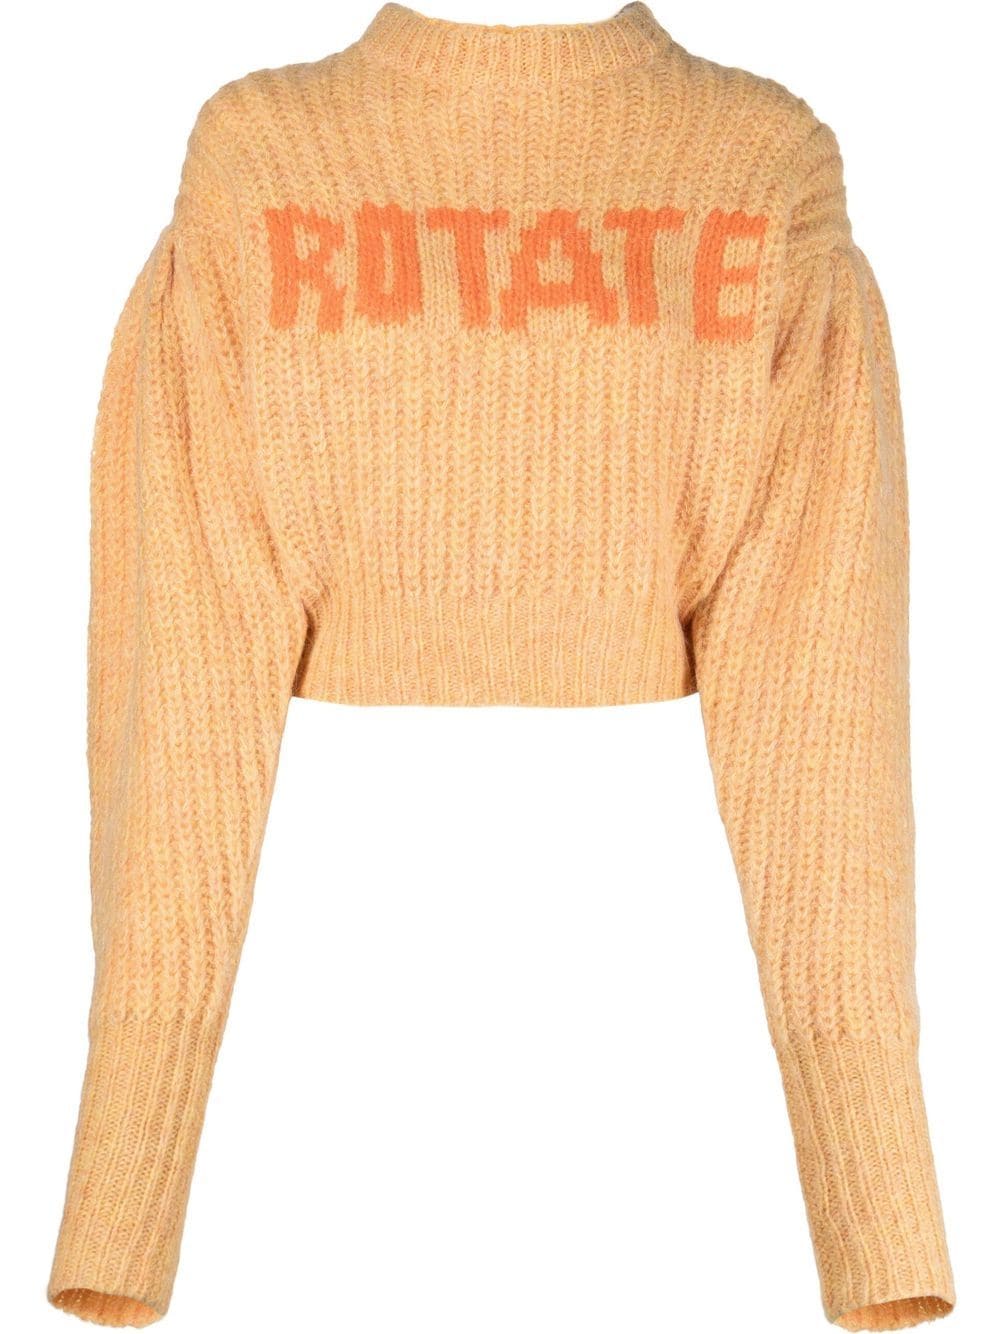 ROTATE logo-print chunky-knit jumper - Orange